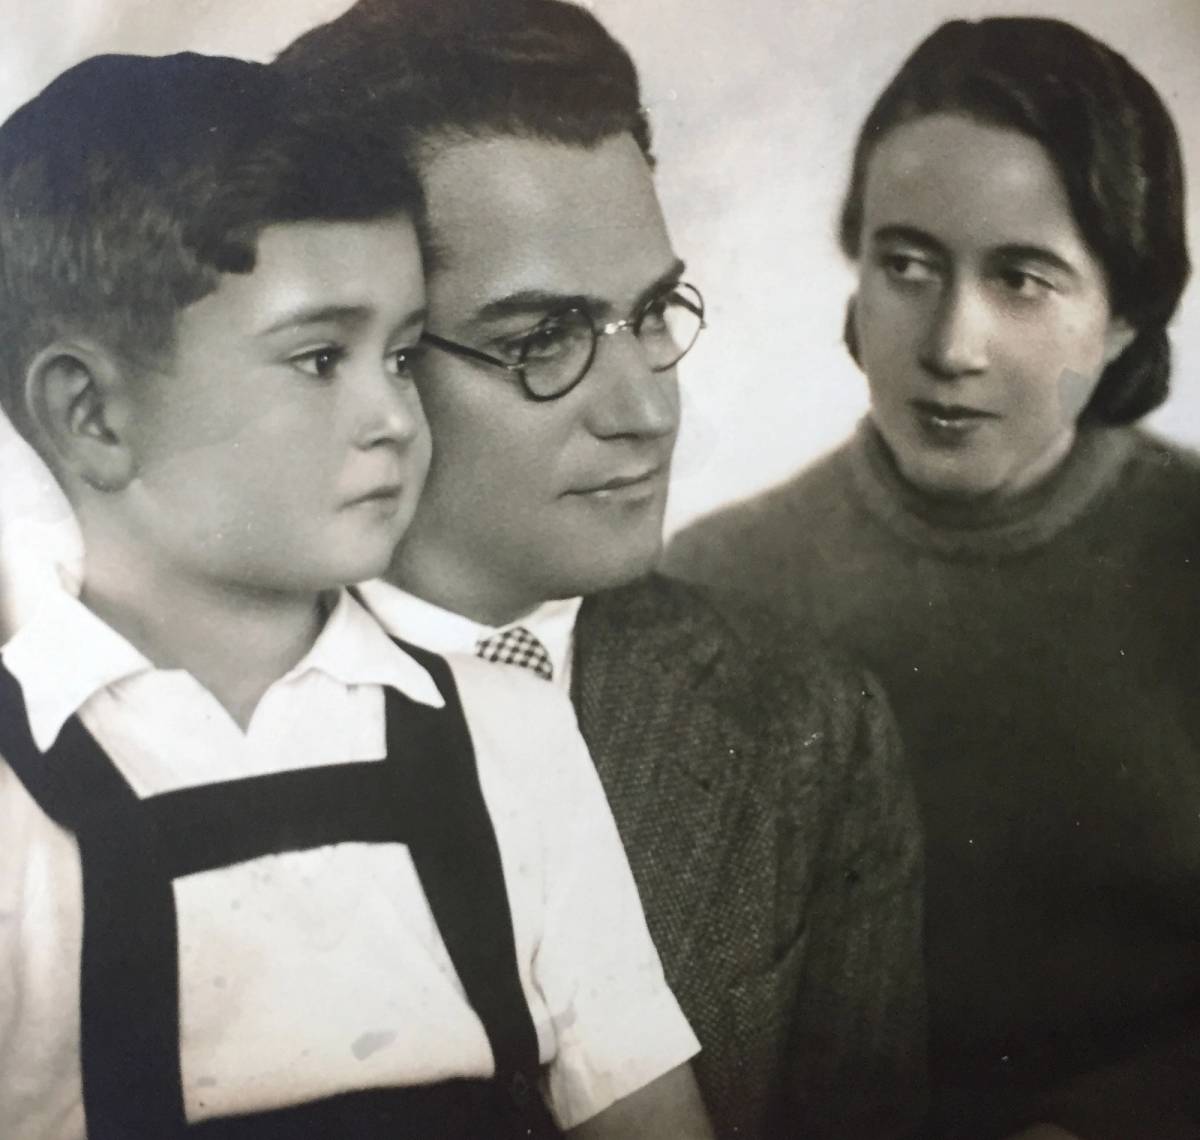 Bruno, Edward, and Margaret Kaiser, before WWII